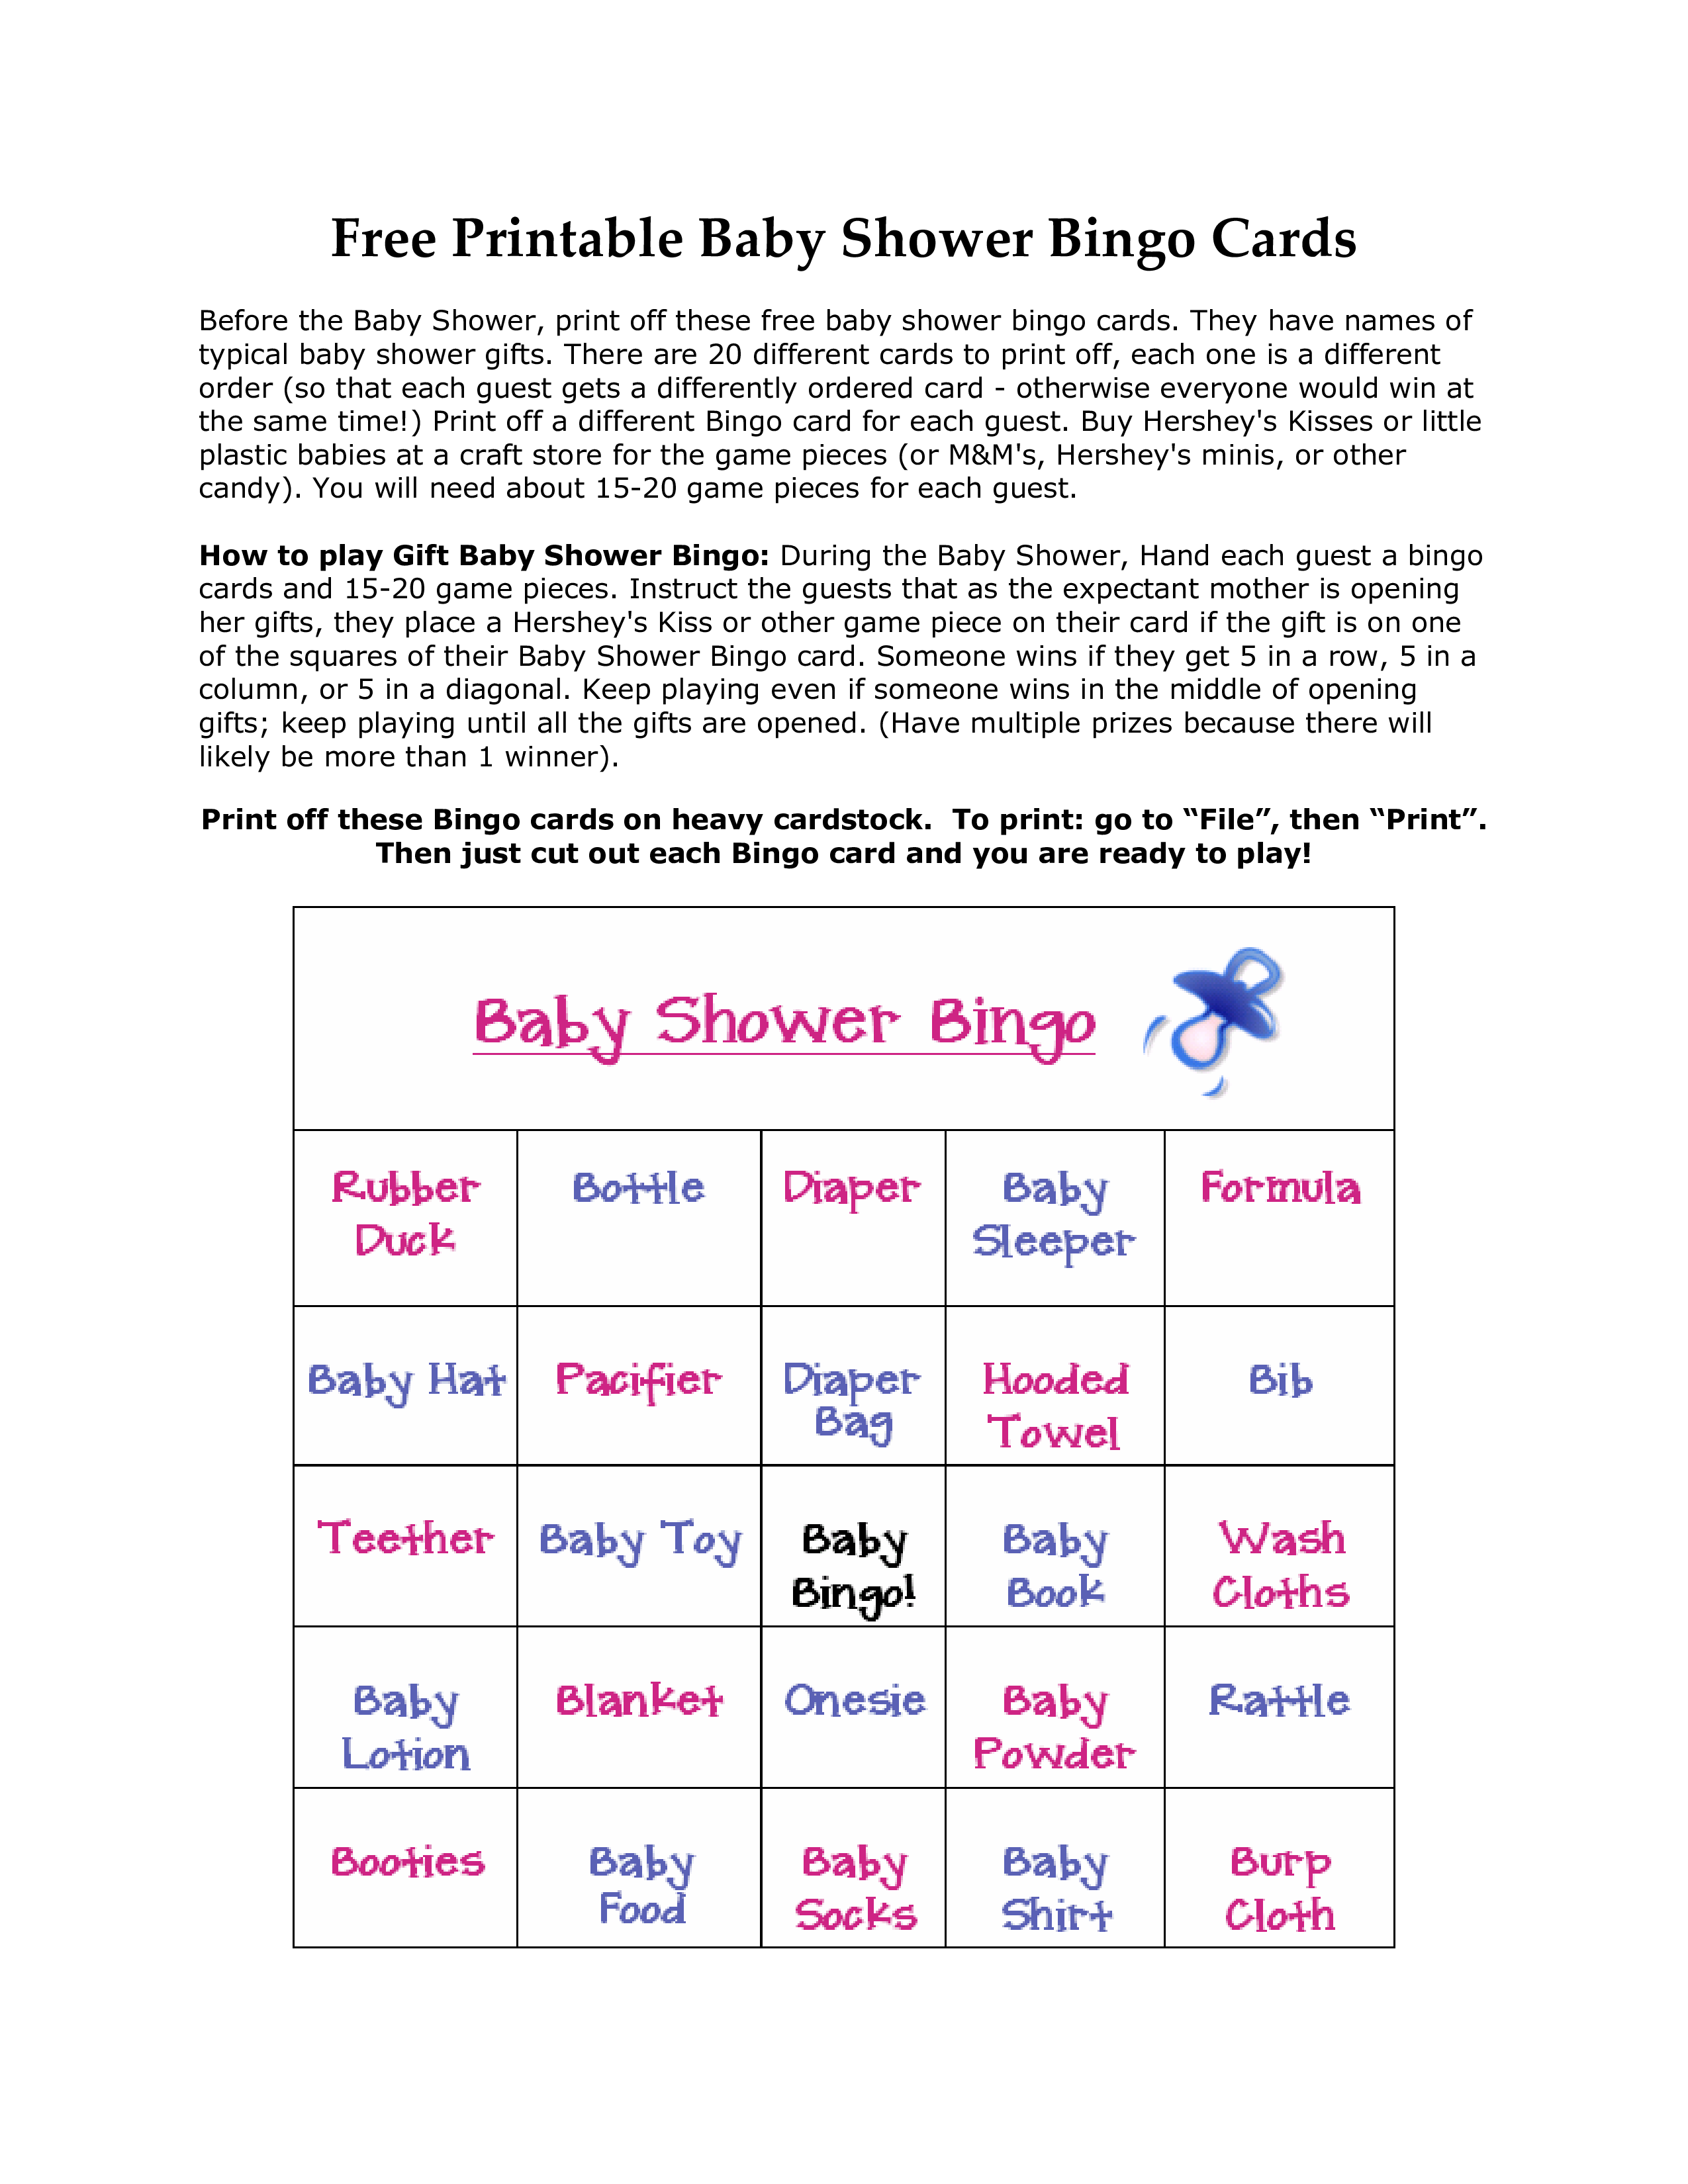 baby-shower-bingo-card-templates-at-allbusinesstemplates